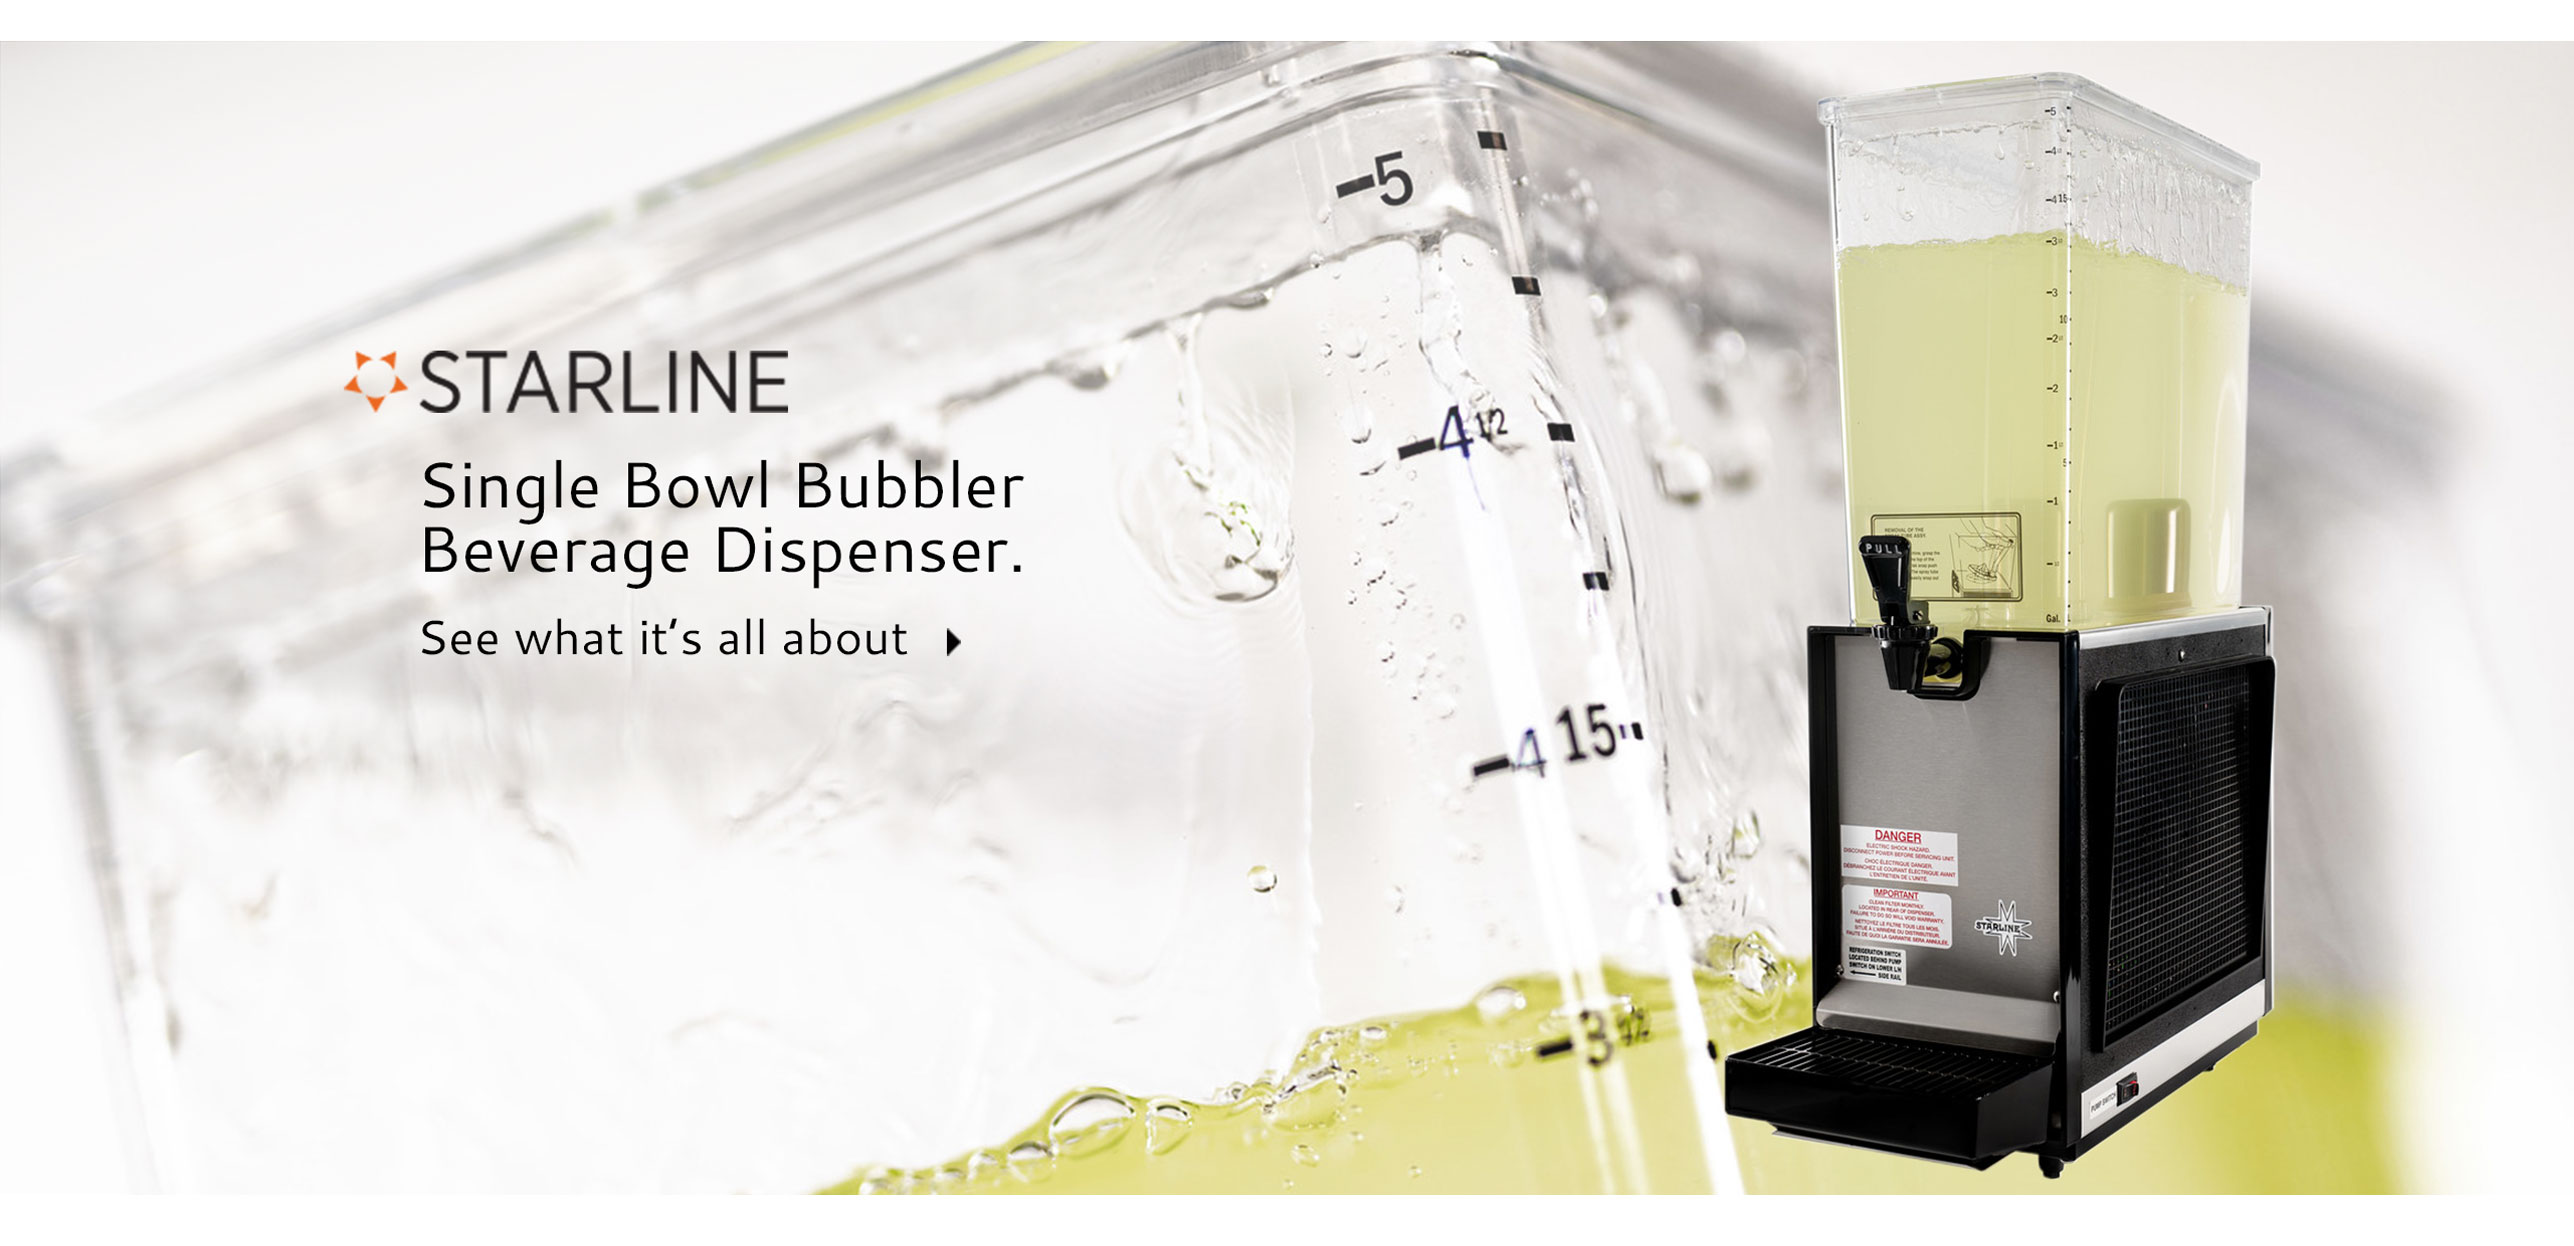 Starline S1
Double Bowl Bubbler Beverage Dispenser